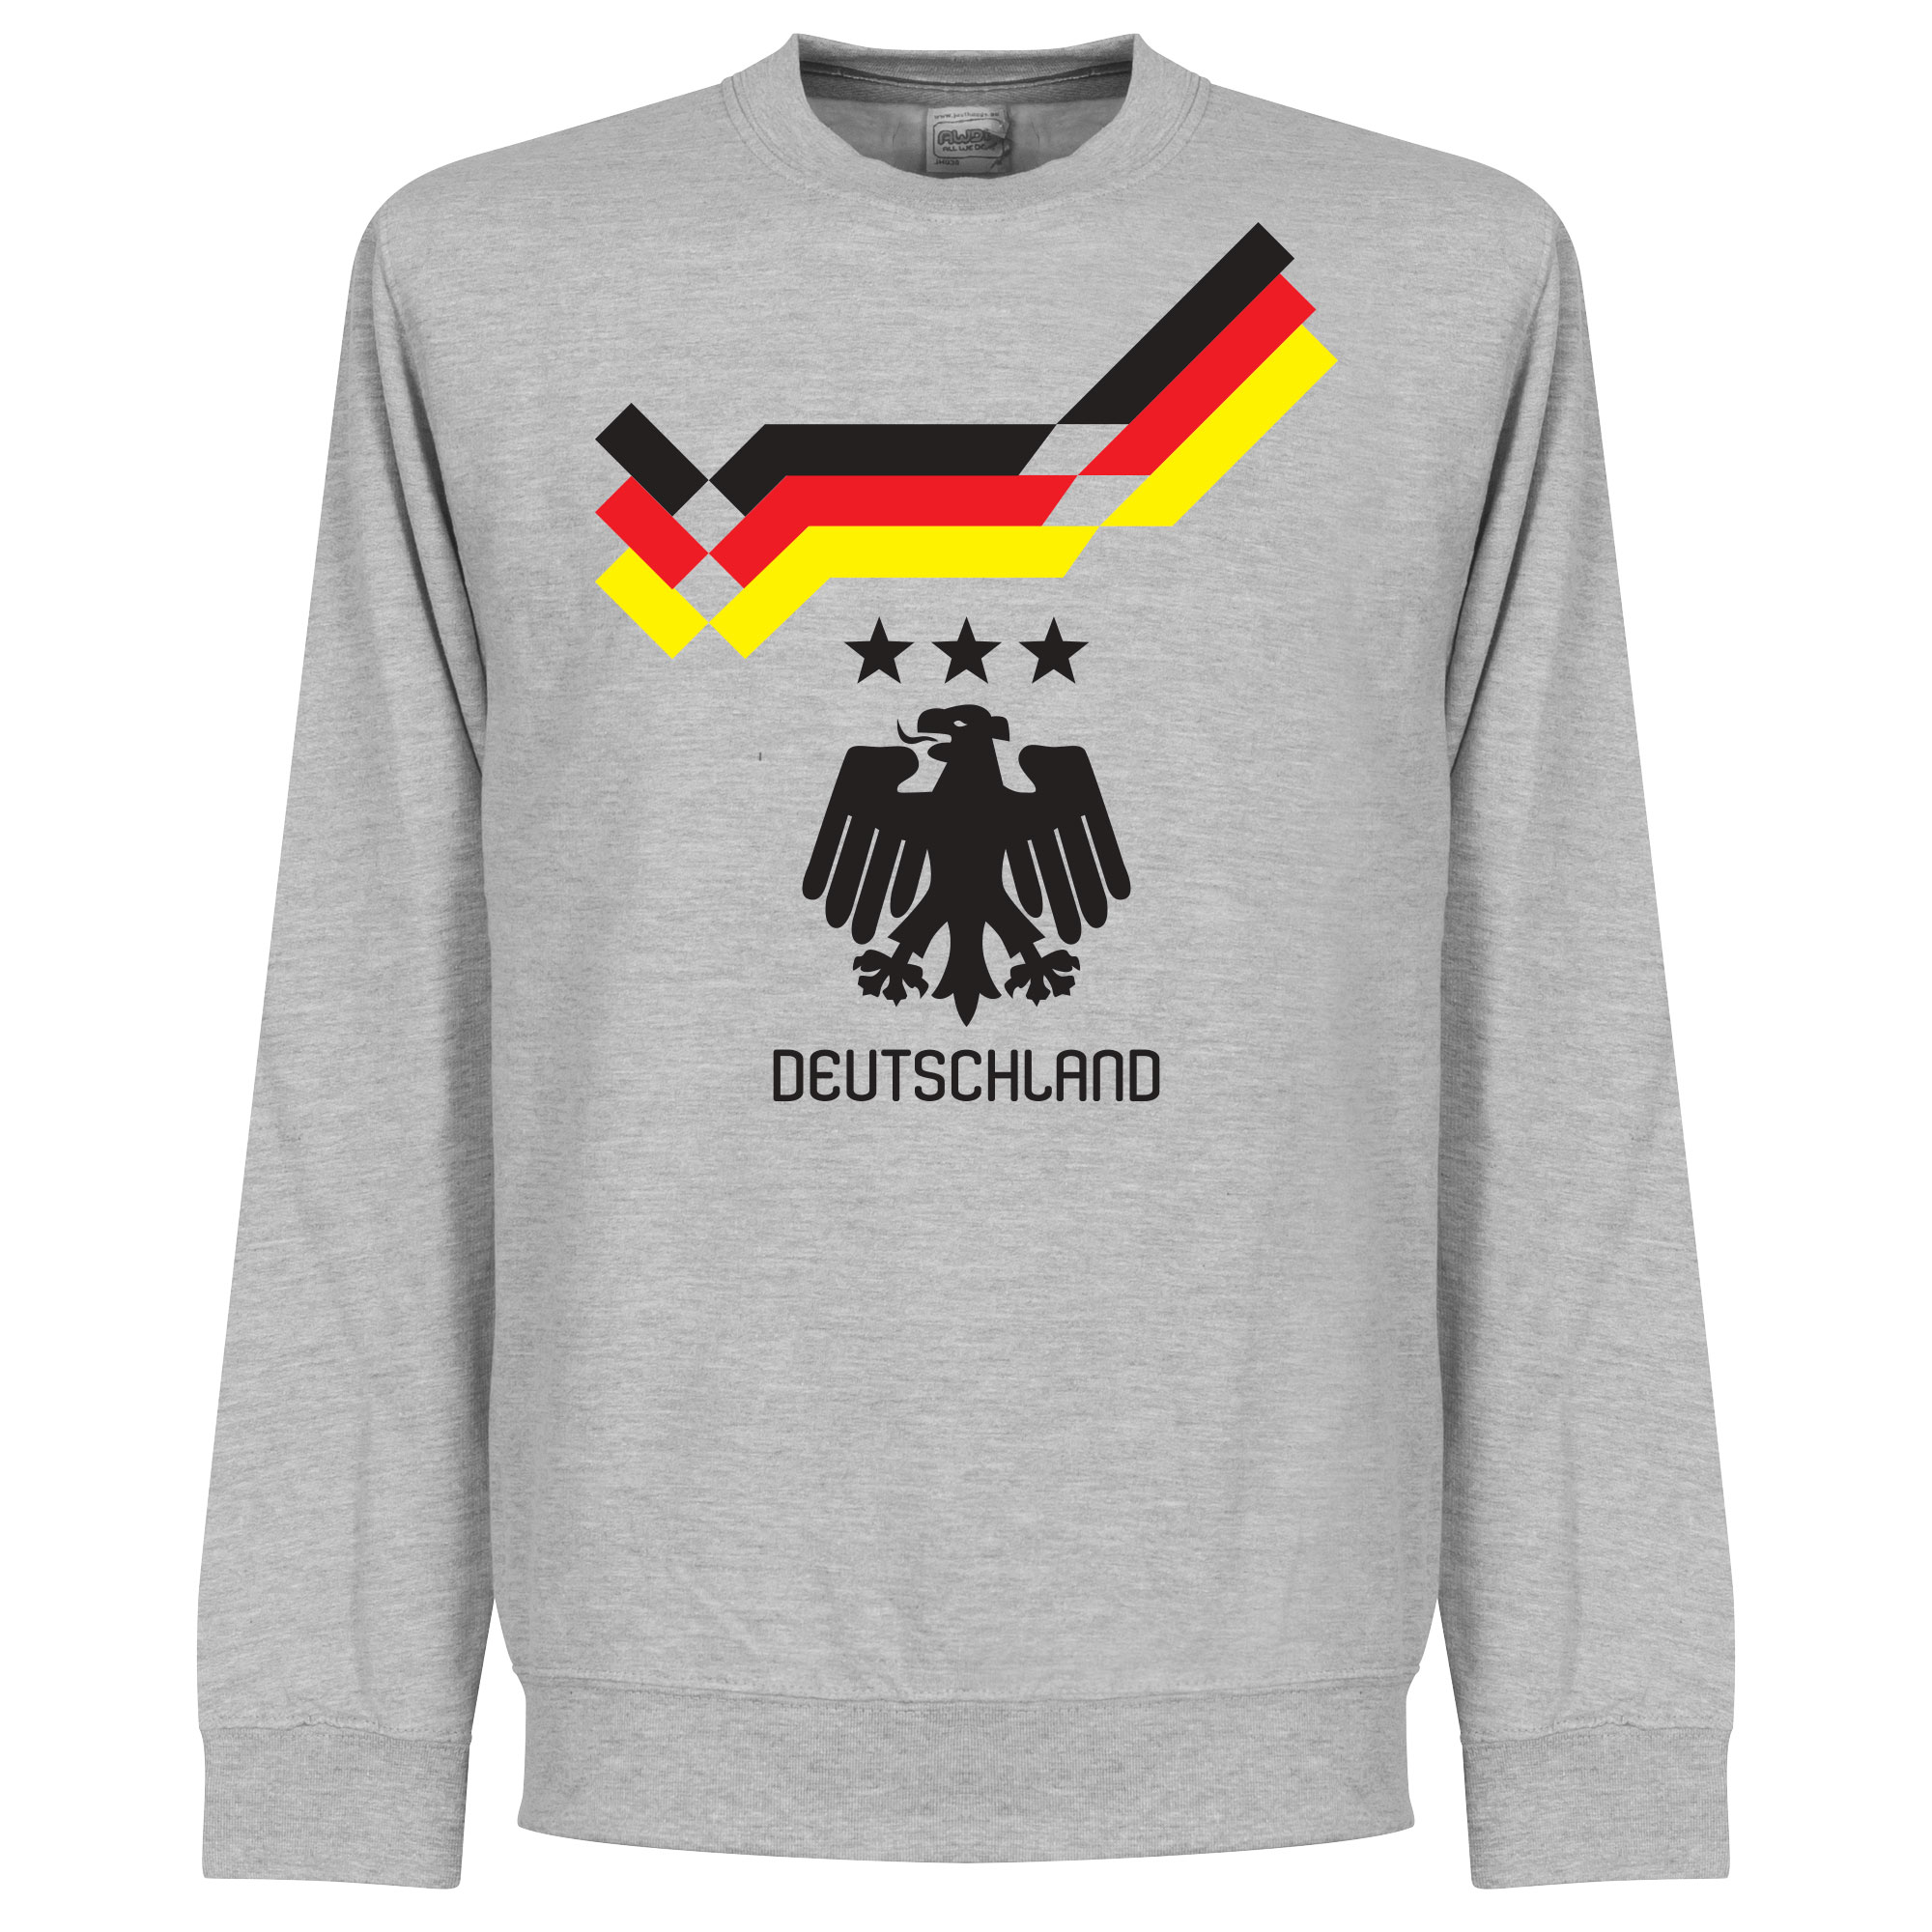 Duitsland 1990 Retro Sweater